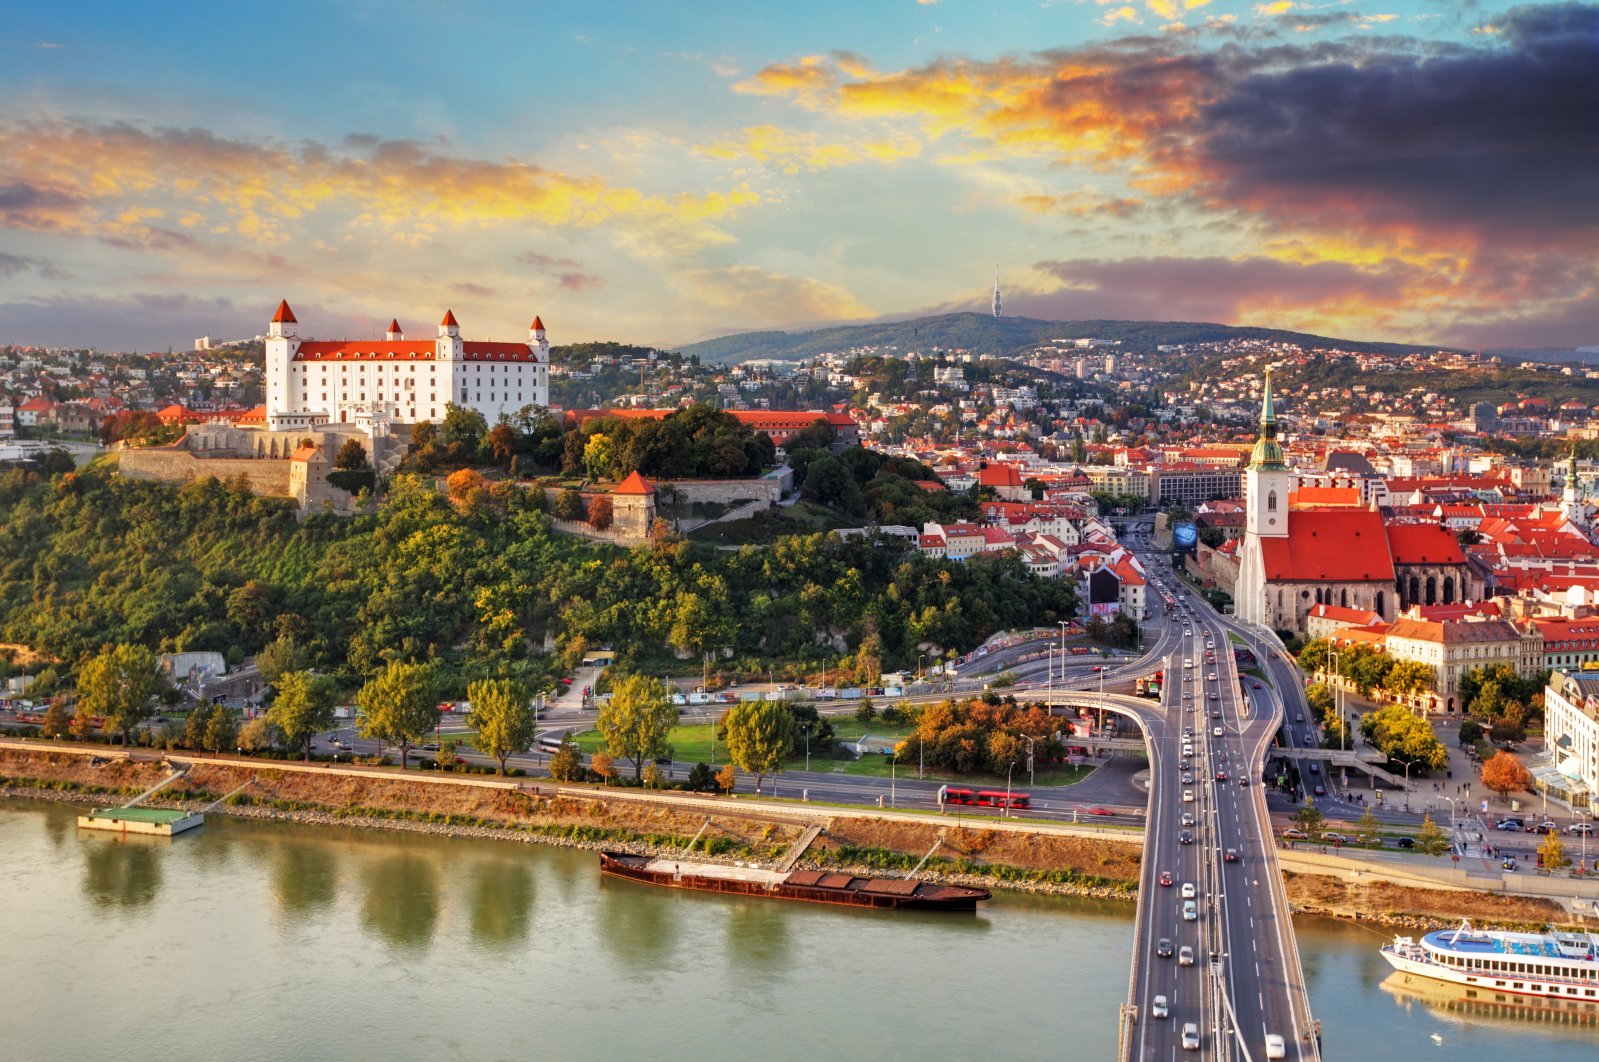 At sunset, Bratislava, Slovakia, casts its enchanting glow. (Shutterstock Photo)